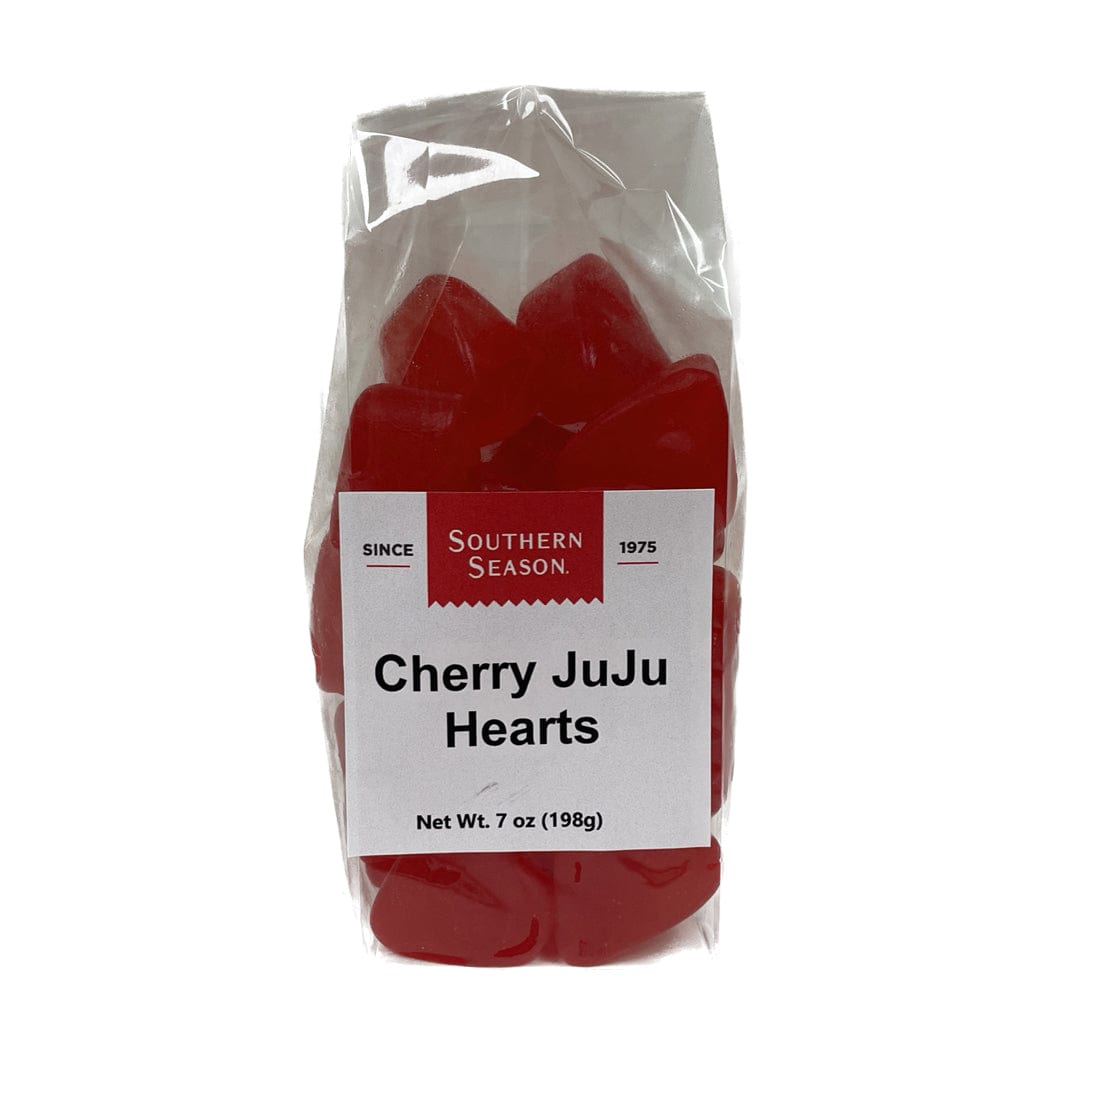 Southern Season Southern Season Valentine's Cherry Juju Hearts 7 oz